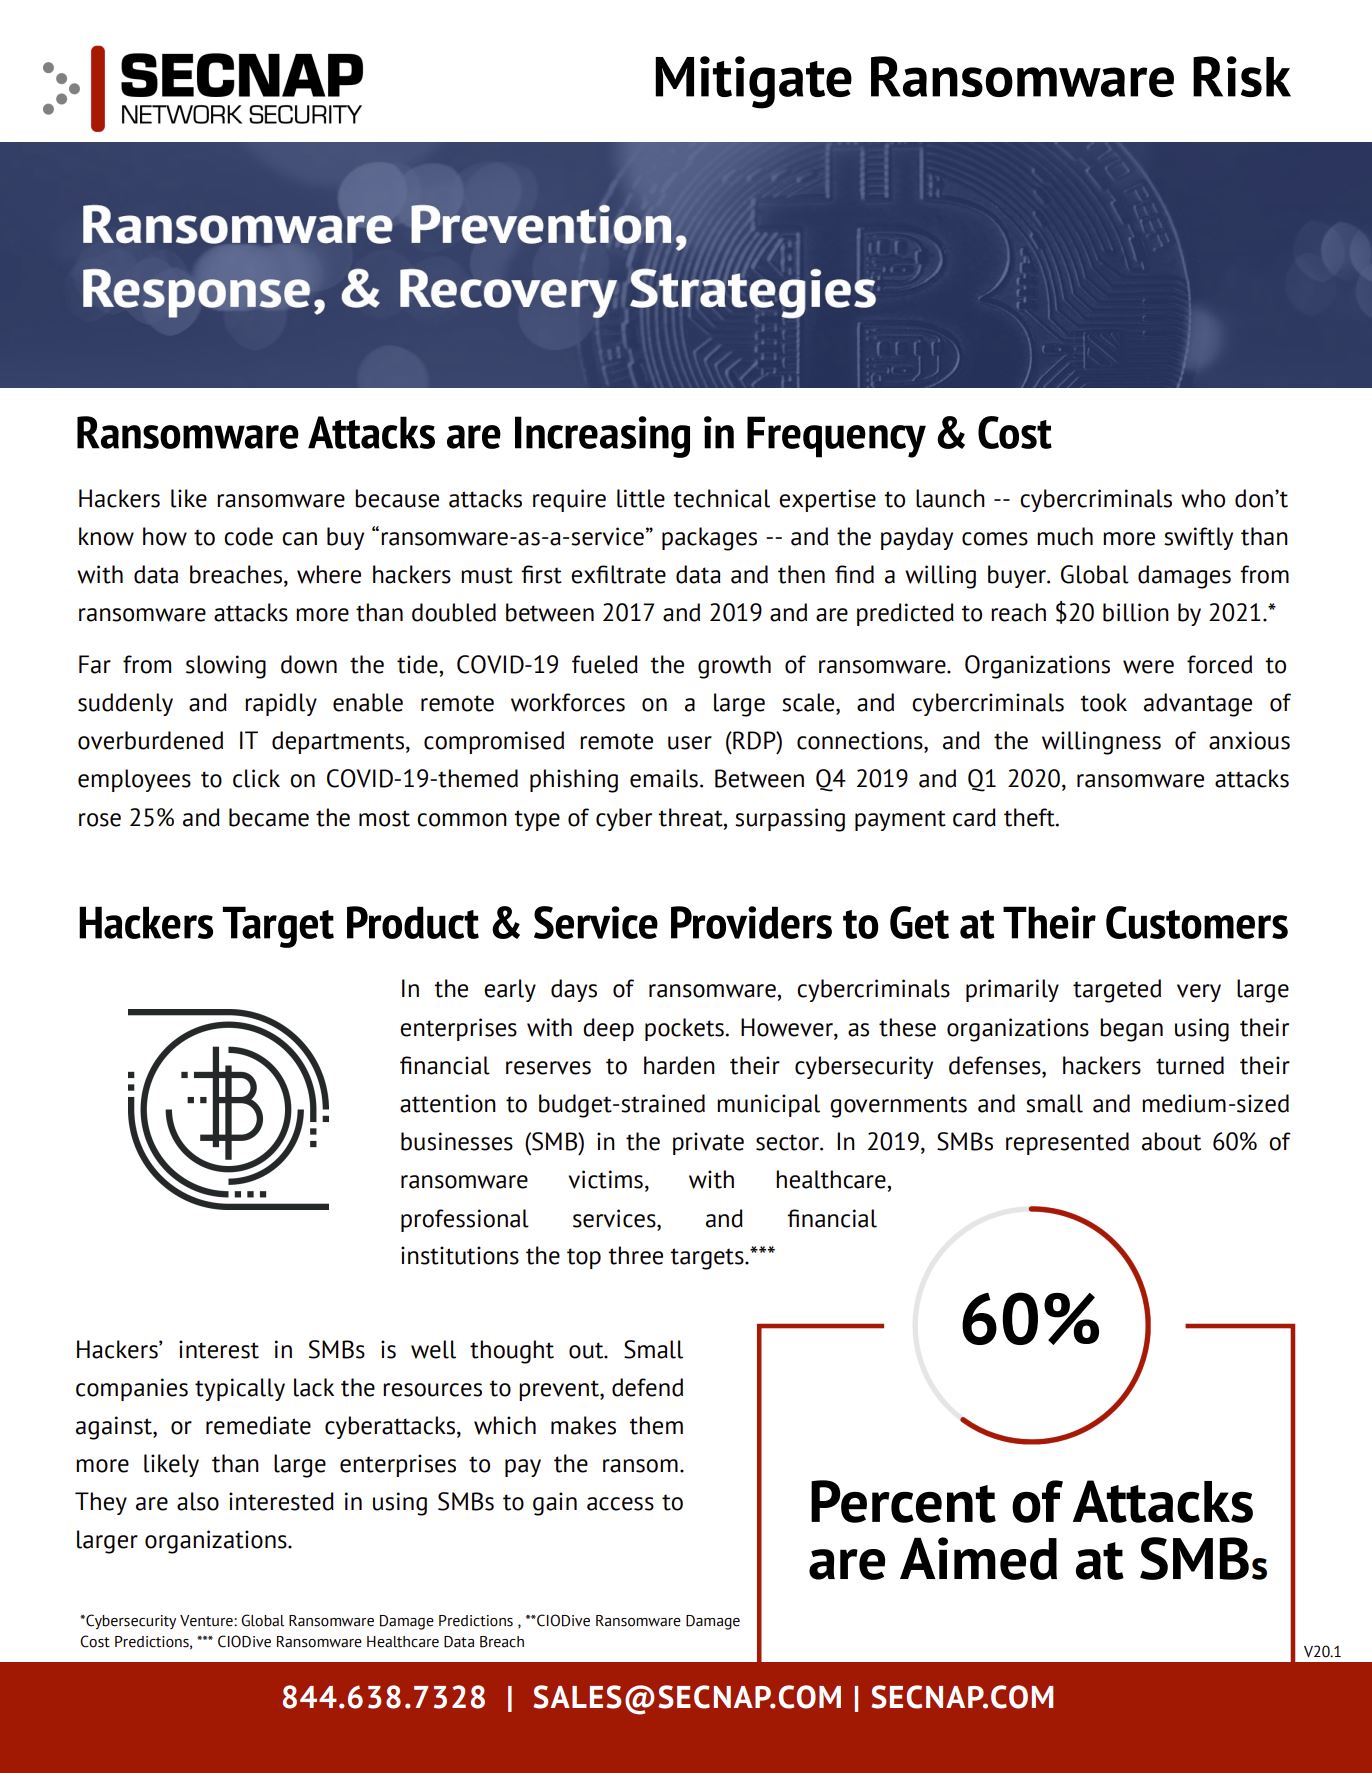 SECNAP Mitigating Ransomware Risk